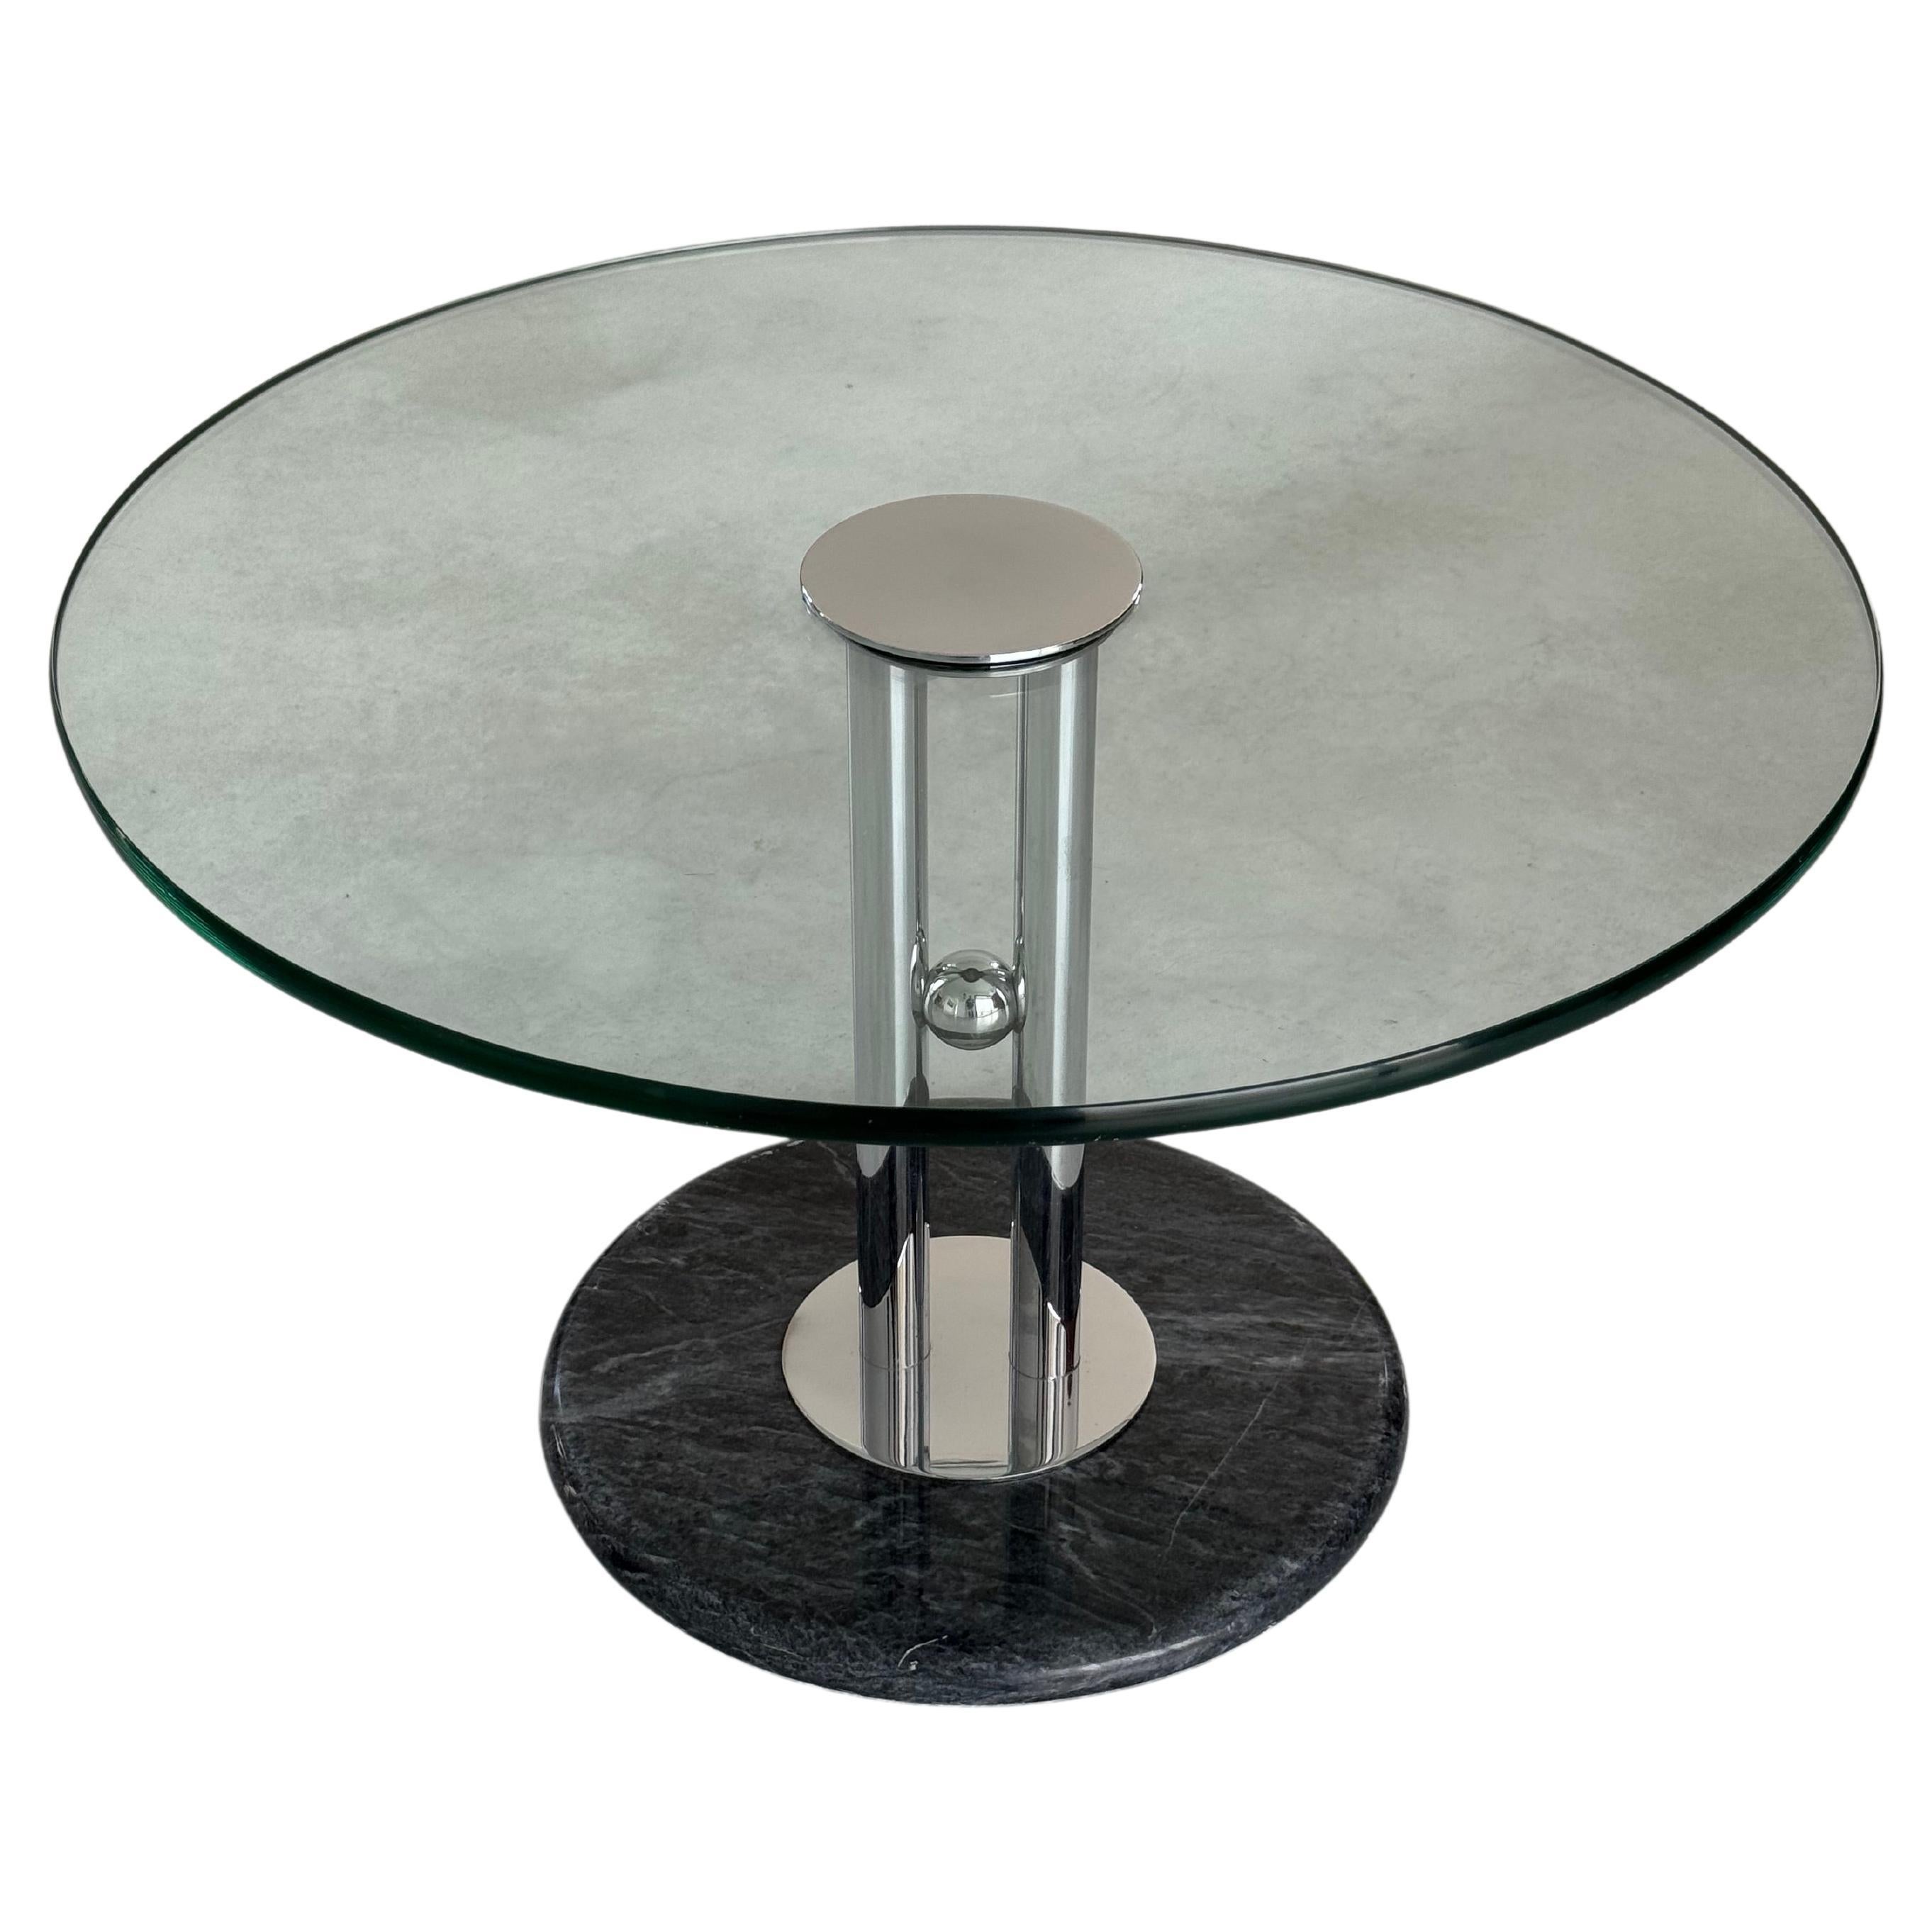 Table basse postmoderne en marbre et verre, design italien, vers les années 1980